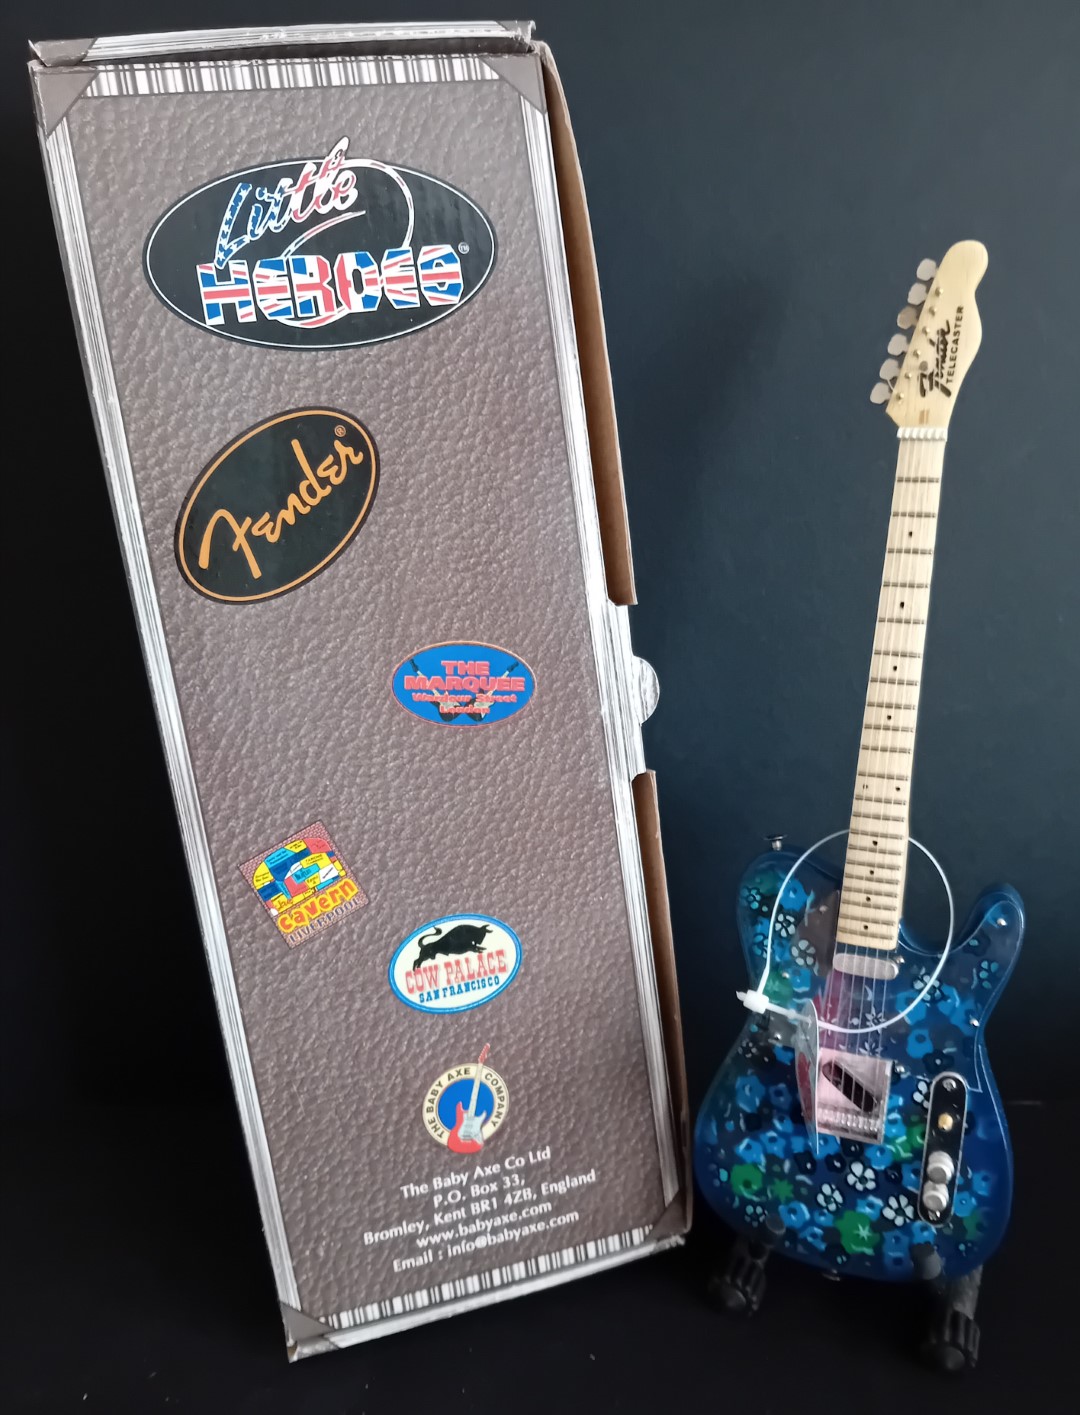 Miniature Fender Telecaster